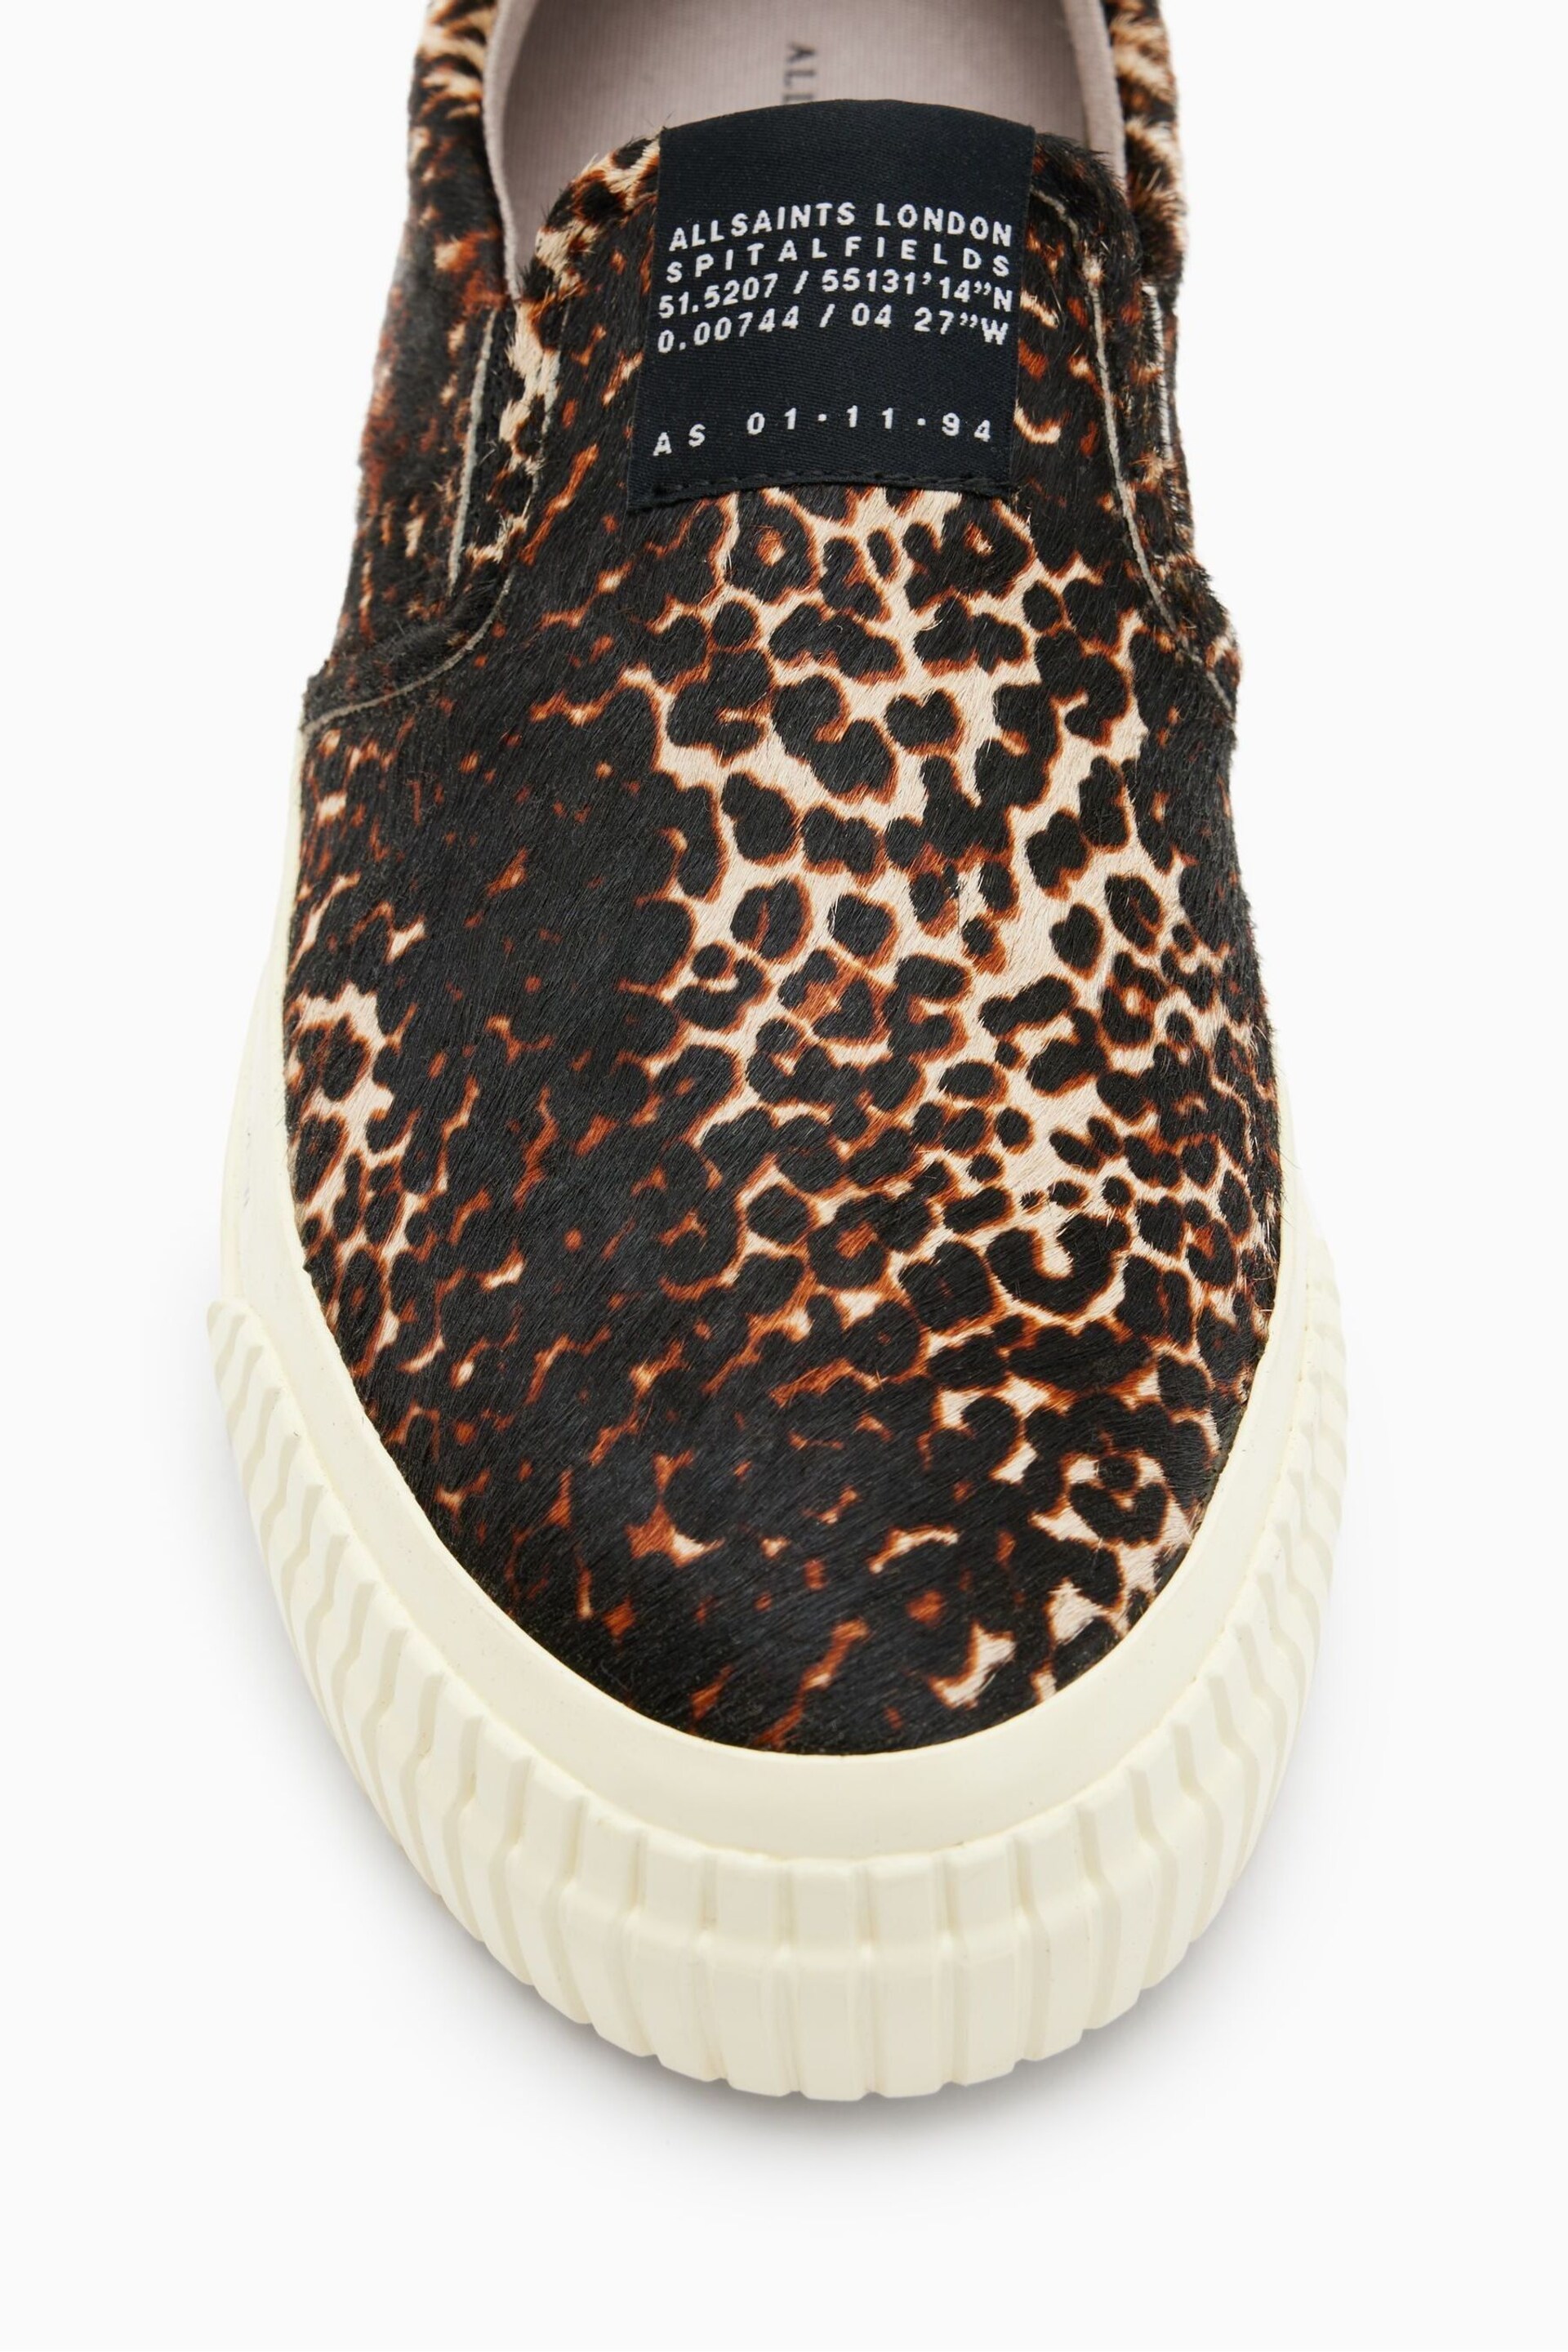 AllSaints Black Slip Sneakers - Image 4 of 7